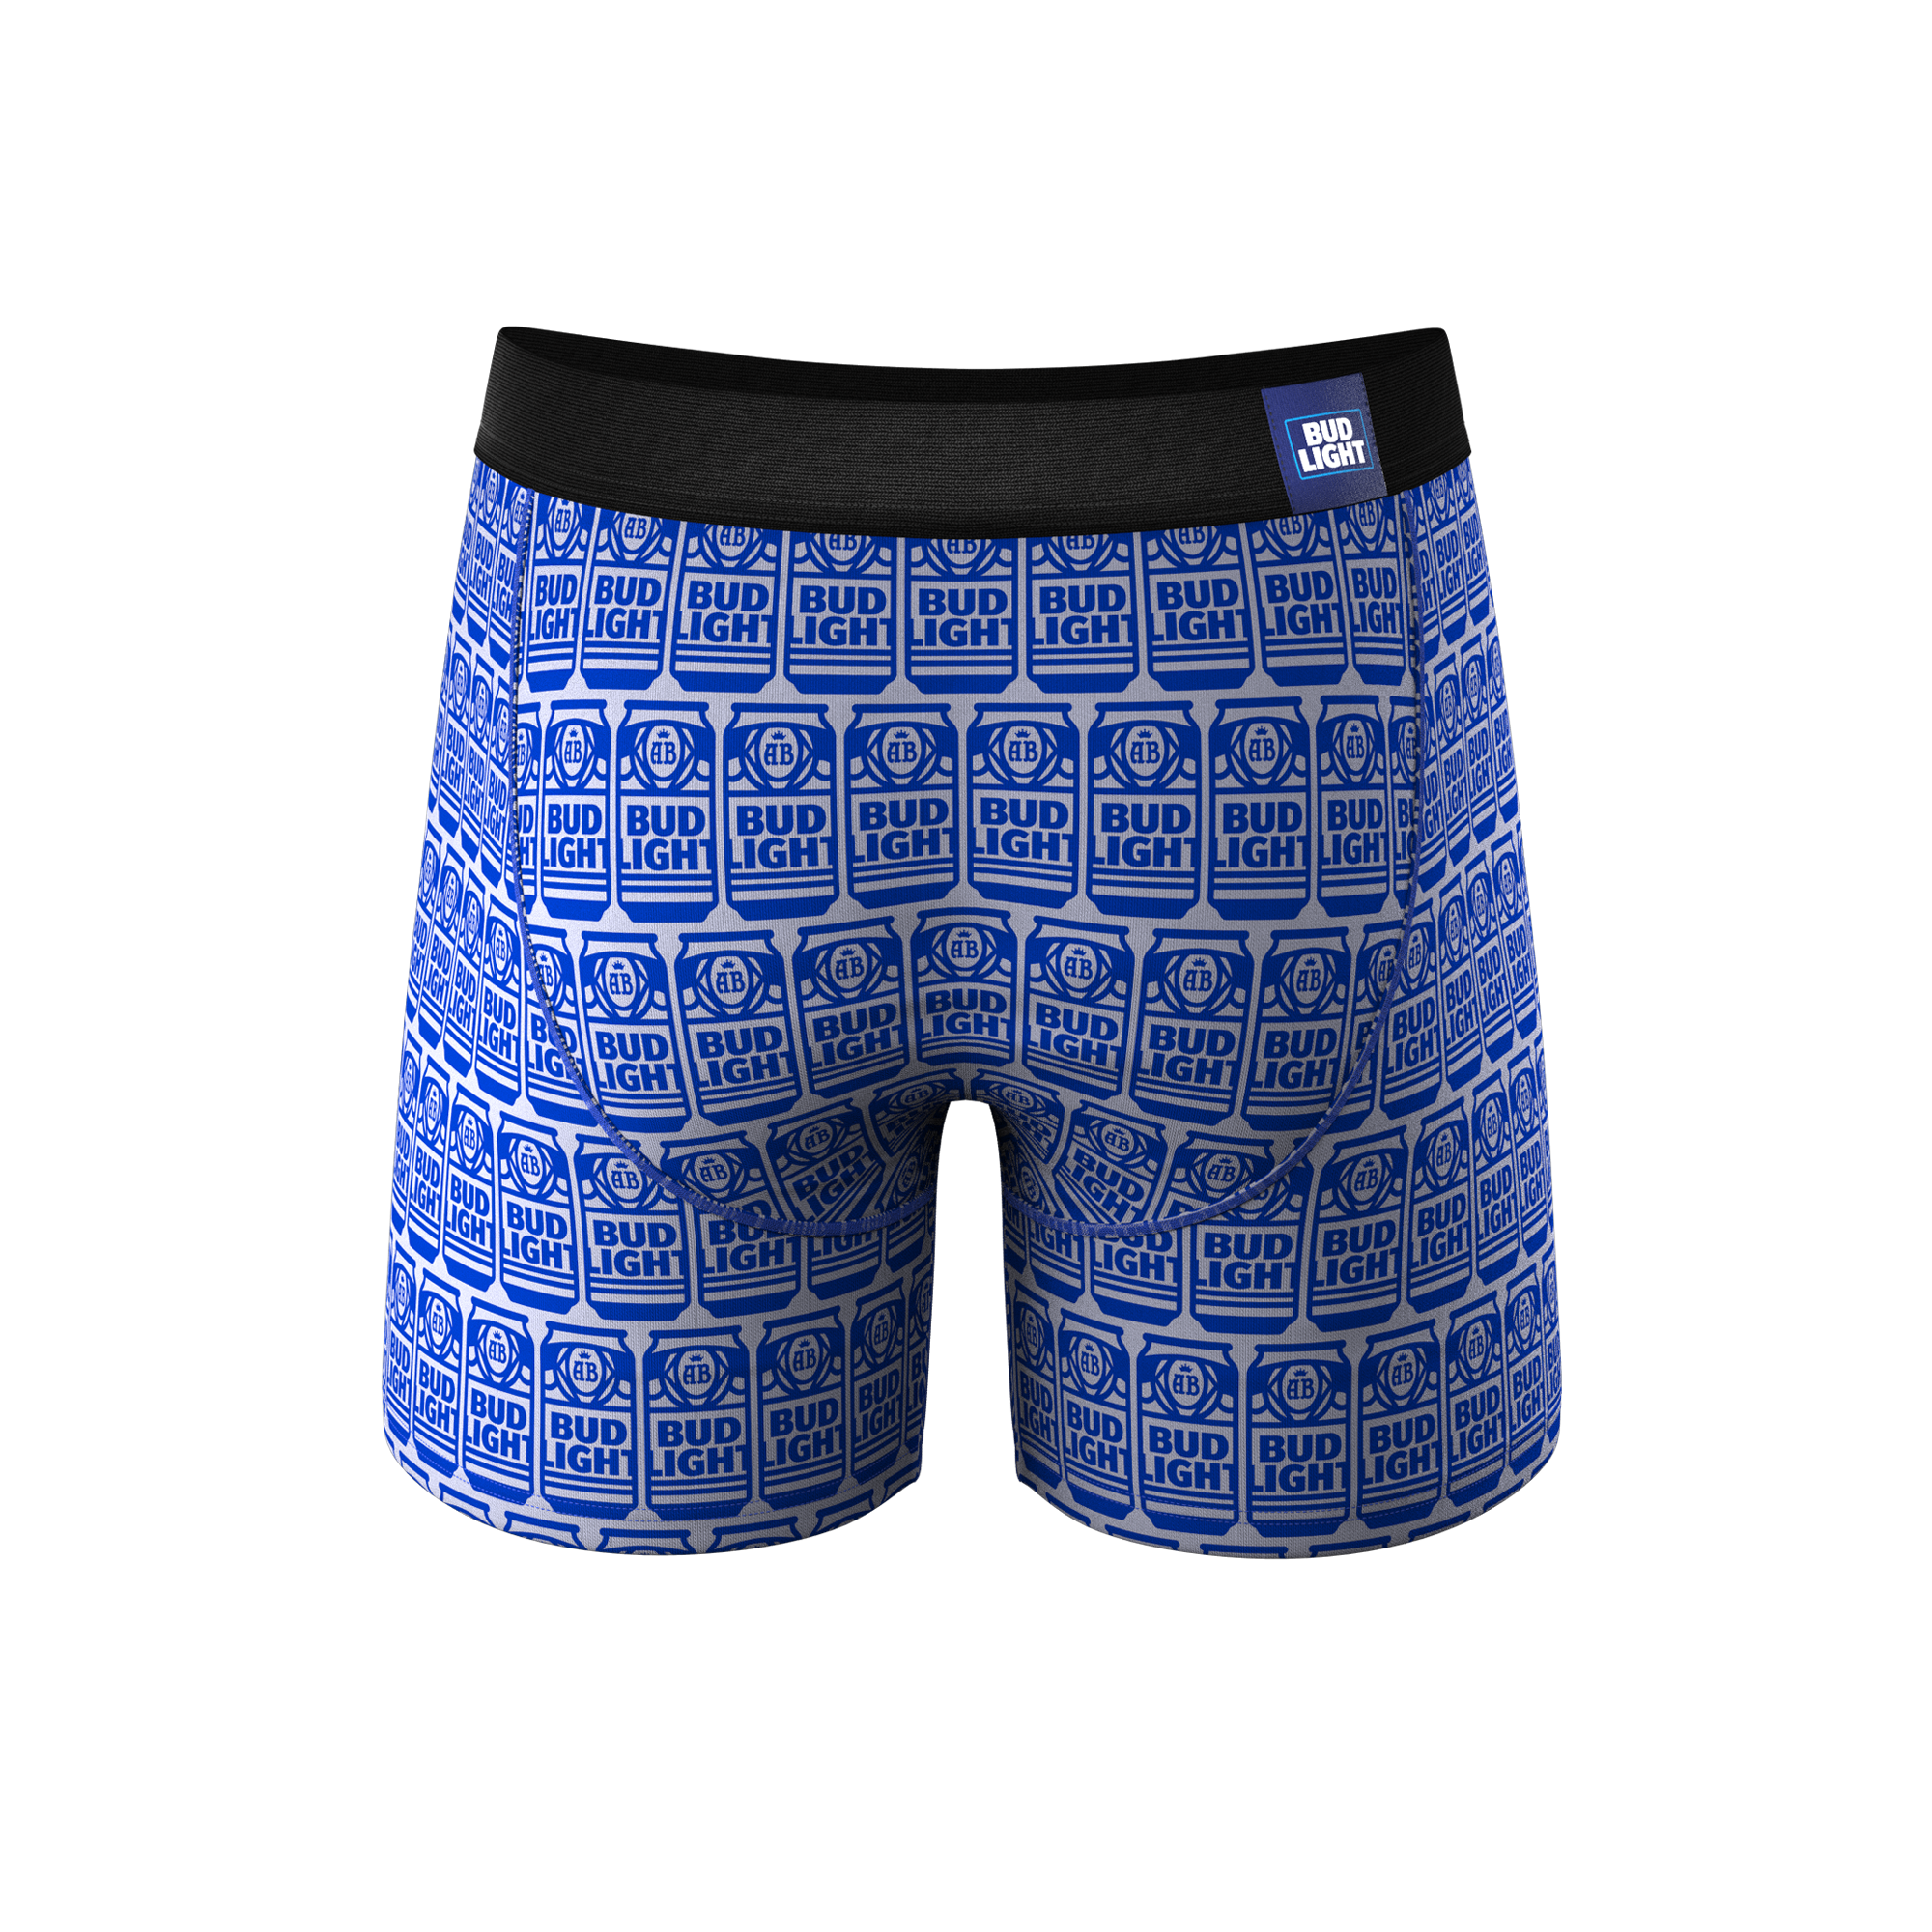 Official Bud Light Ball Hammock® Pouch Underwear